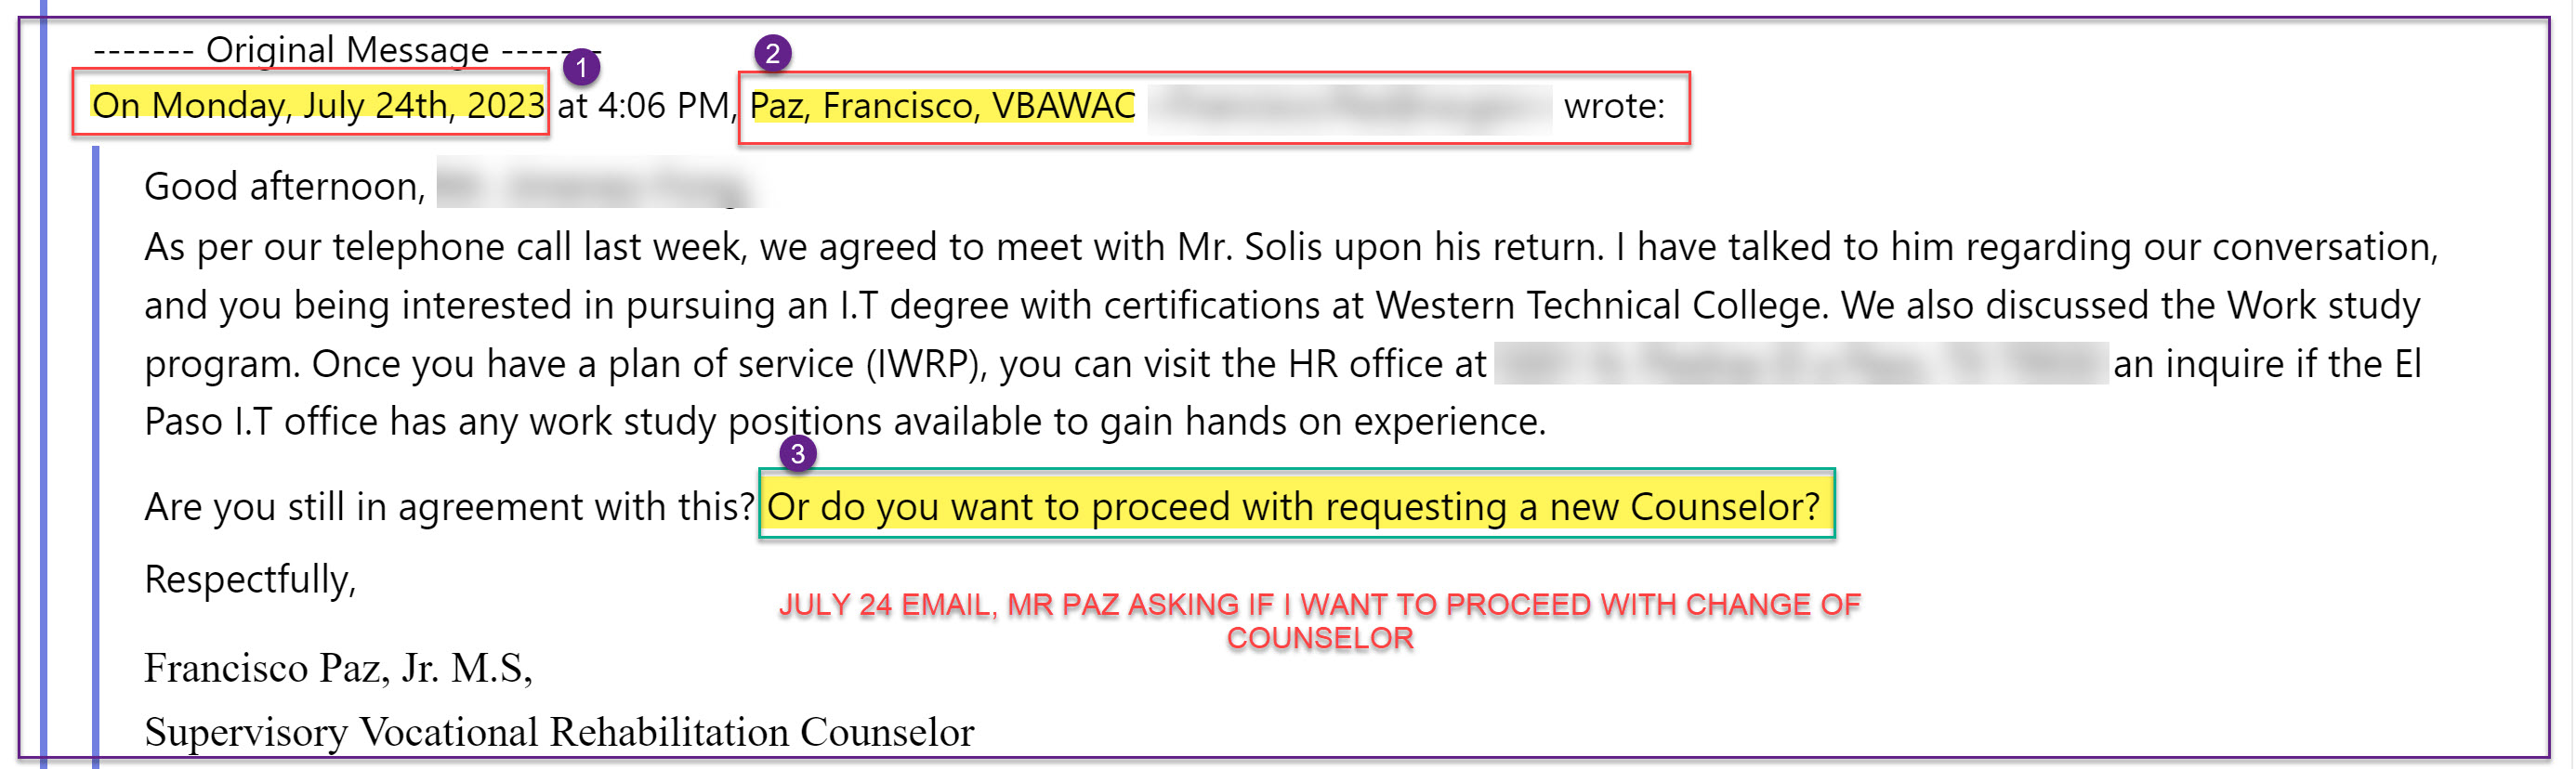 july 24 Mr. Paz asks if vet wans change counselor